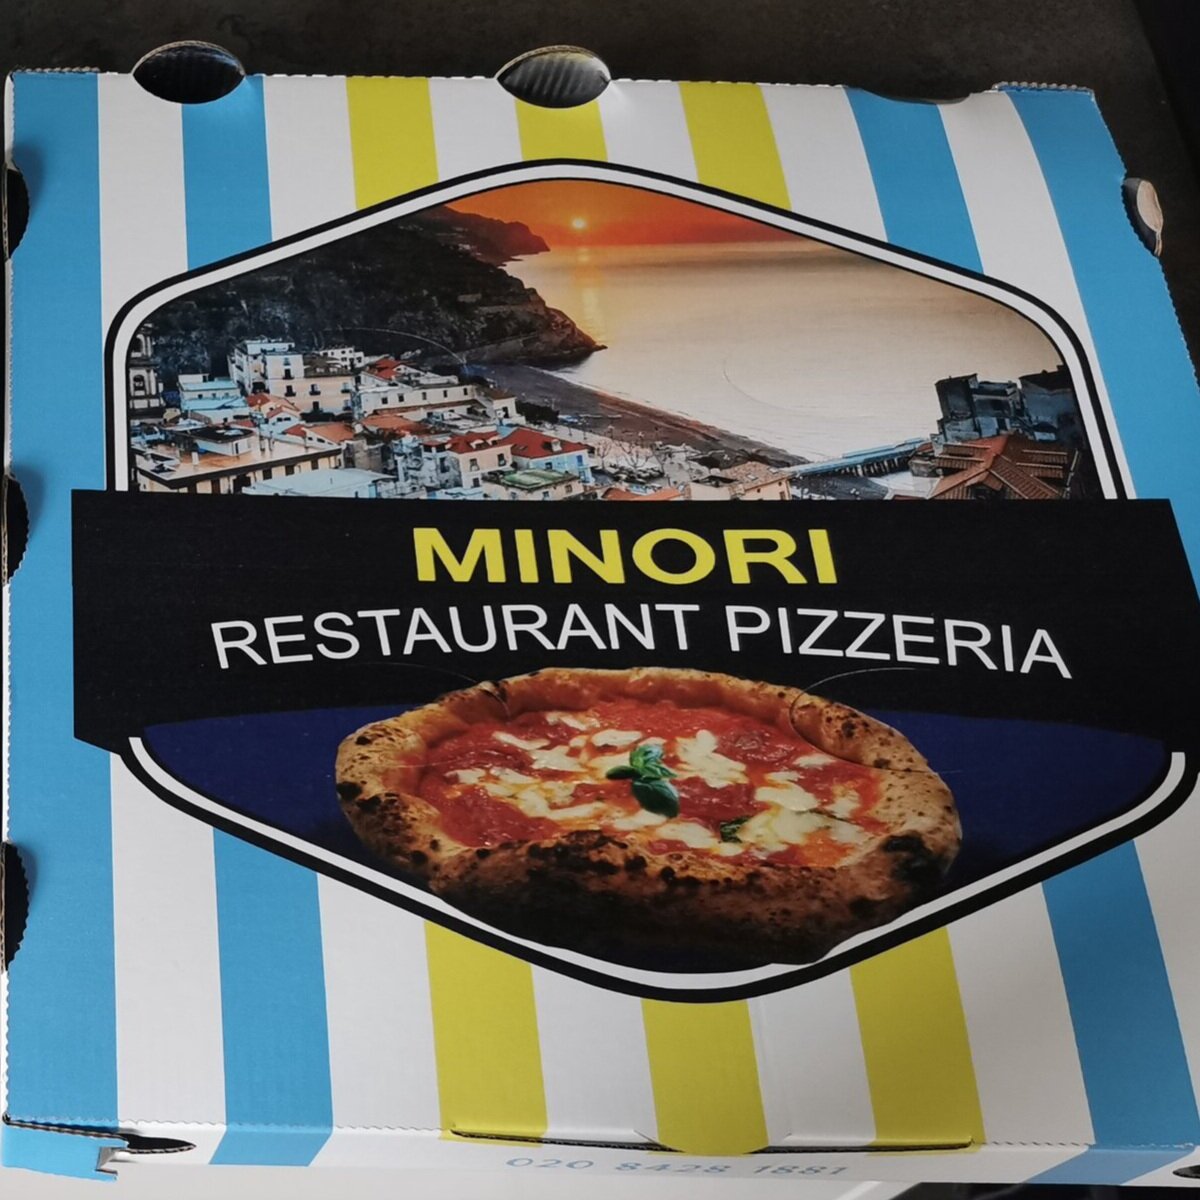 Vegan options from Minori Pizzeria 